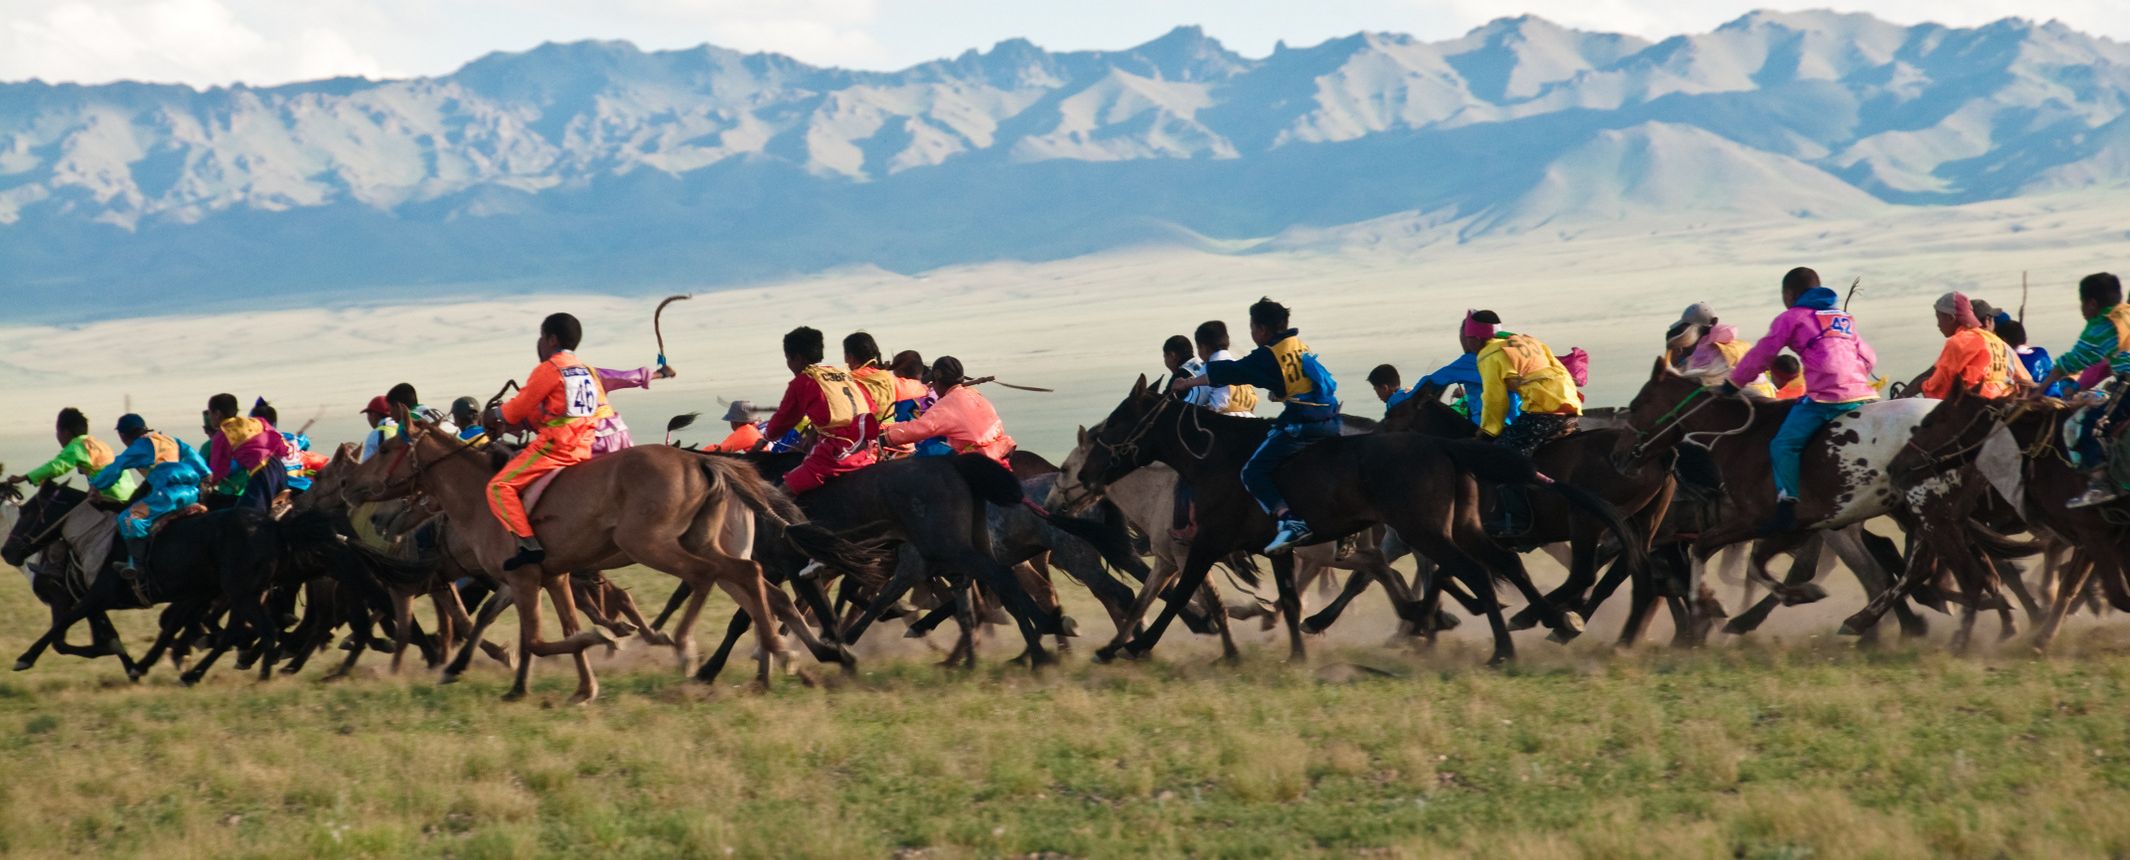 Mongolia -  Festival de Naadam, Gobi y Lago Khovsgol - Salida 8 de Julio